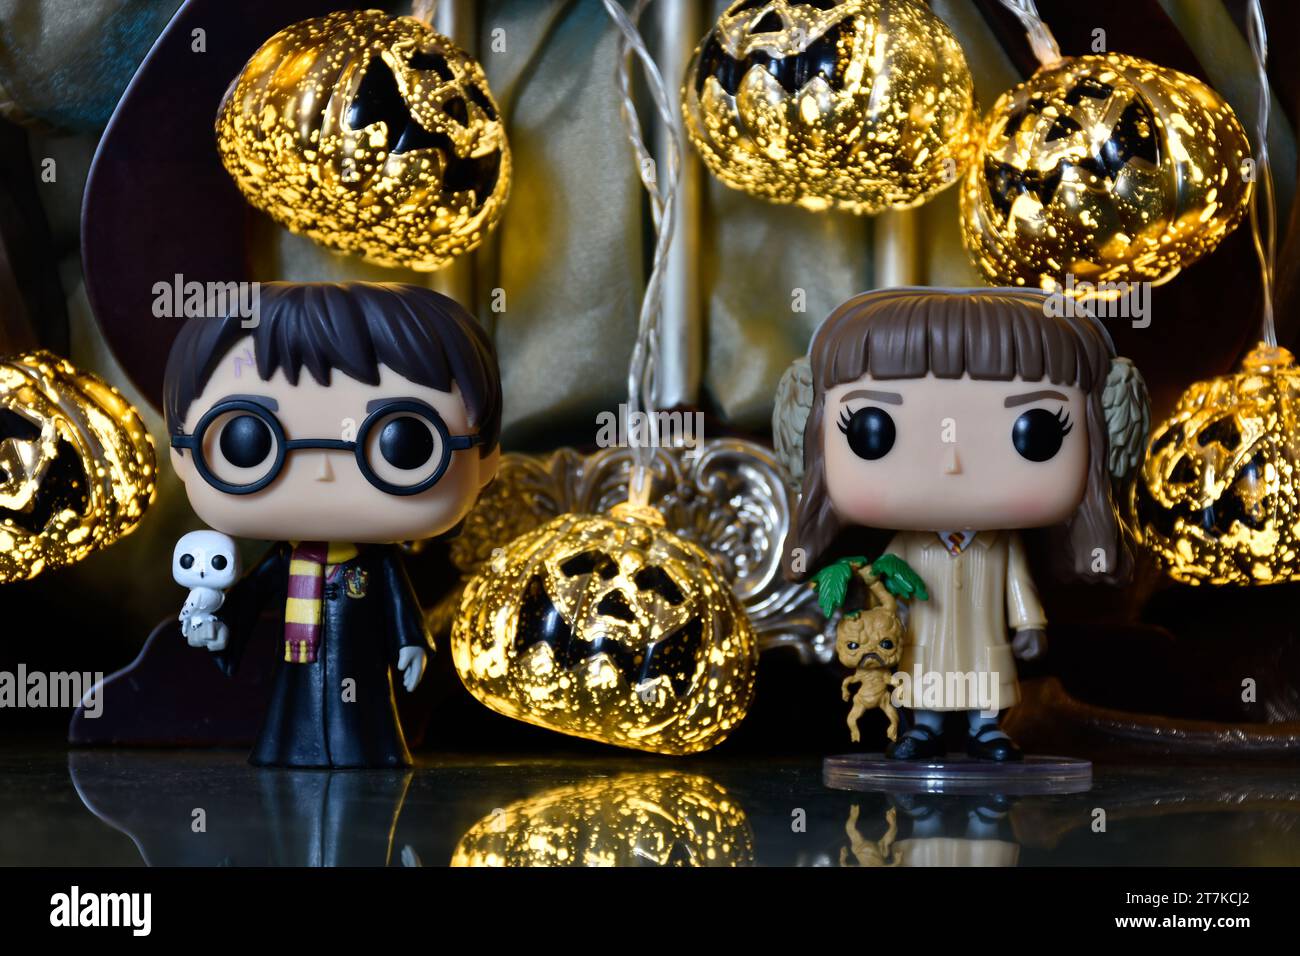 Funko Pop action figures of Harry Potter and Hermione Granger. Halloween pumpkin lights, dark palace, mysterious, magic, spooky season. Stock Photo